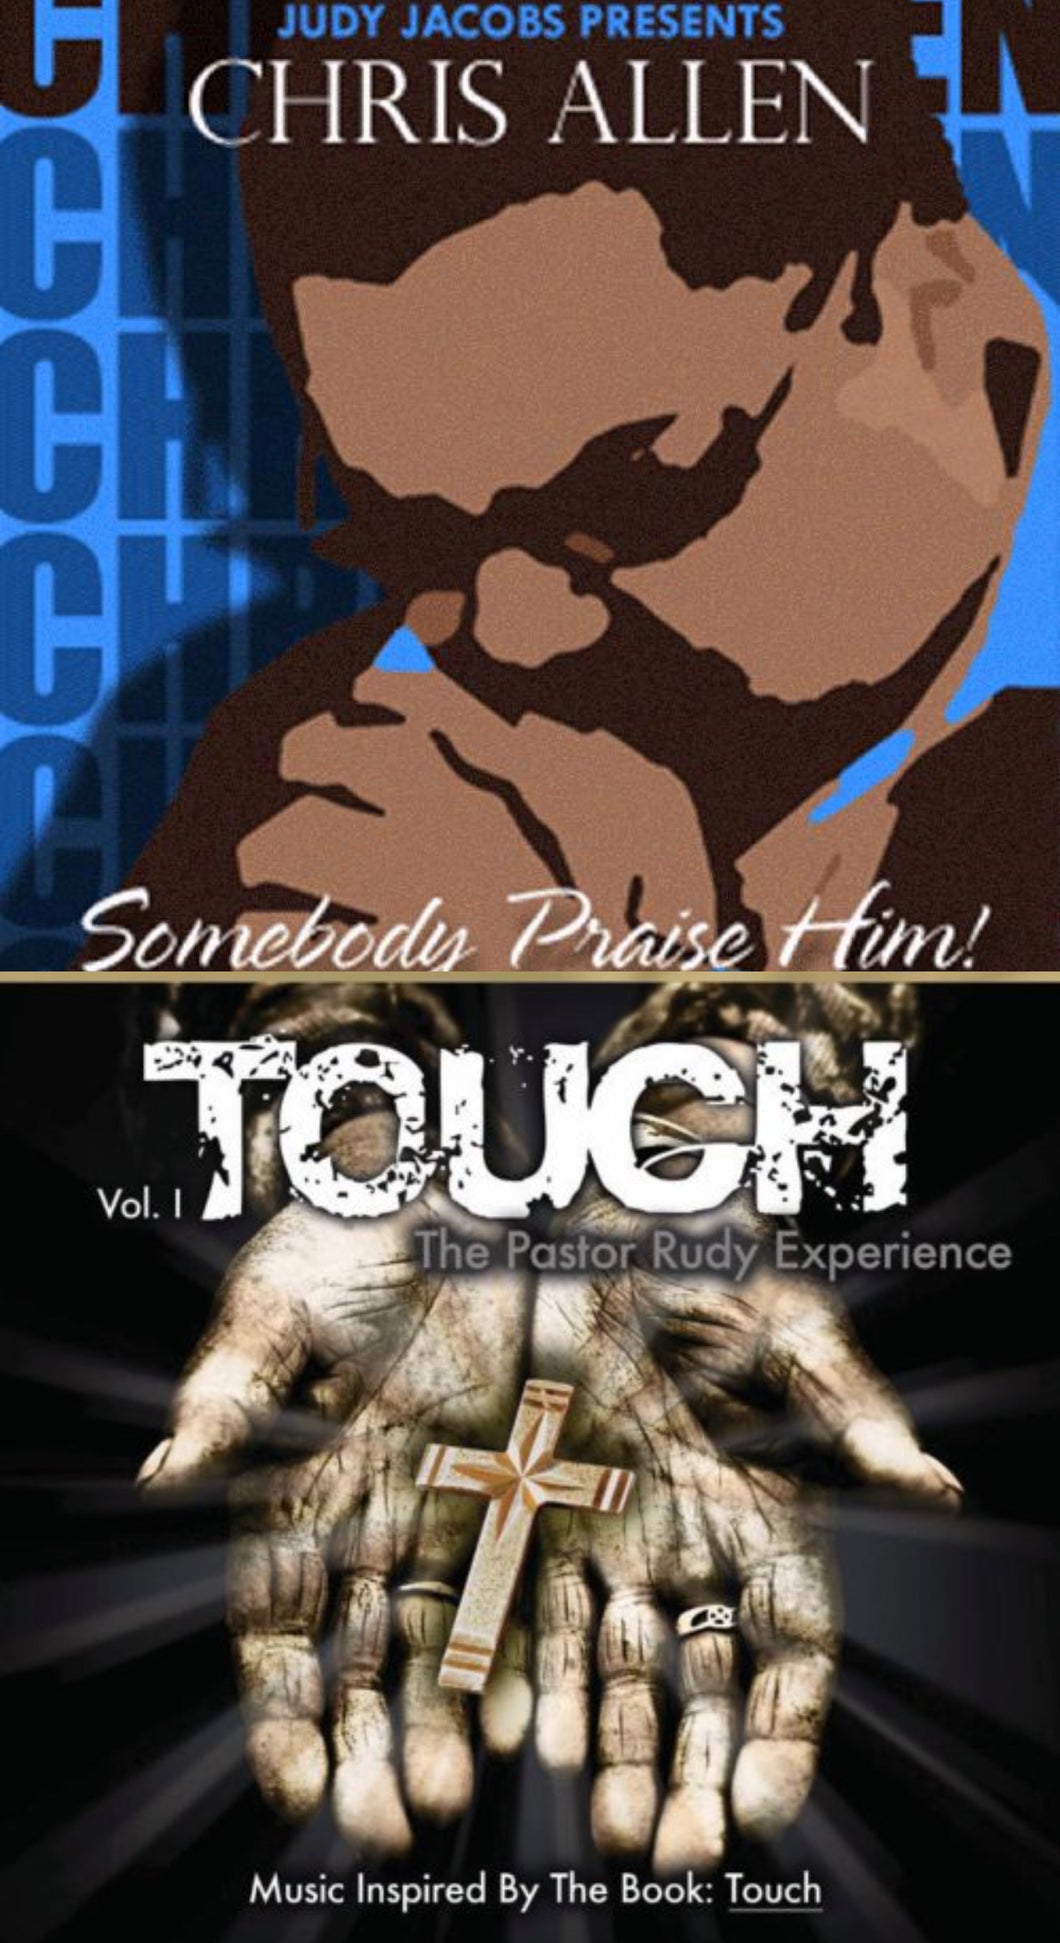 Chris Allen Somebody Praise Him + Pastor Rudy Experience : Touch v.1 2CD/DVD